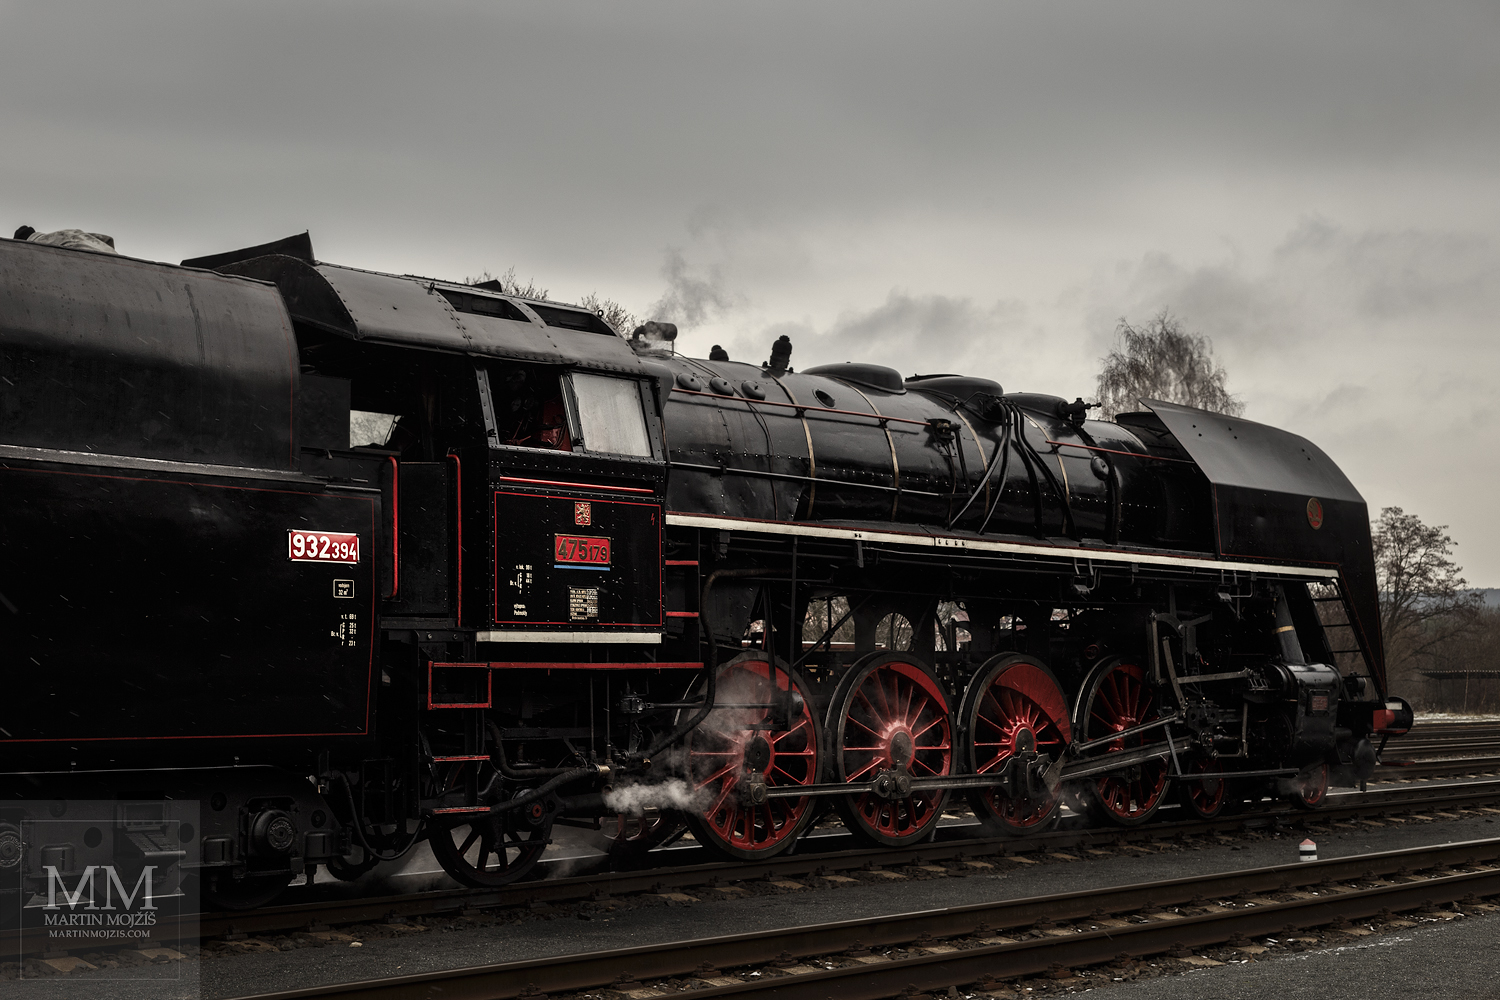 Large format, fine art photograph of the steam locomotive 475.179 Noblewoman. Martin Mojzis.